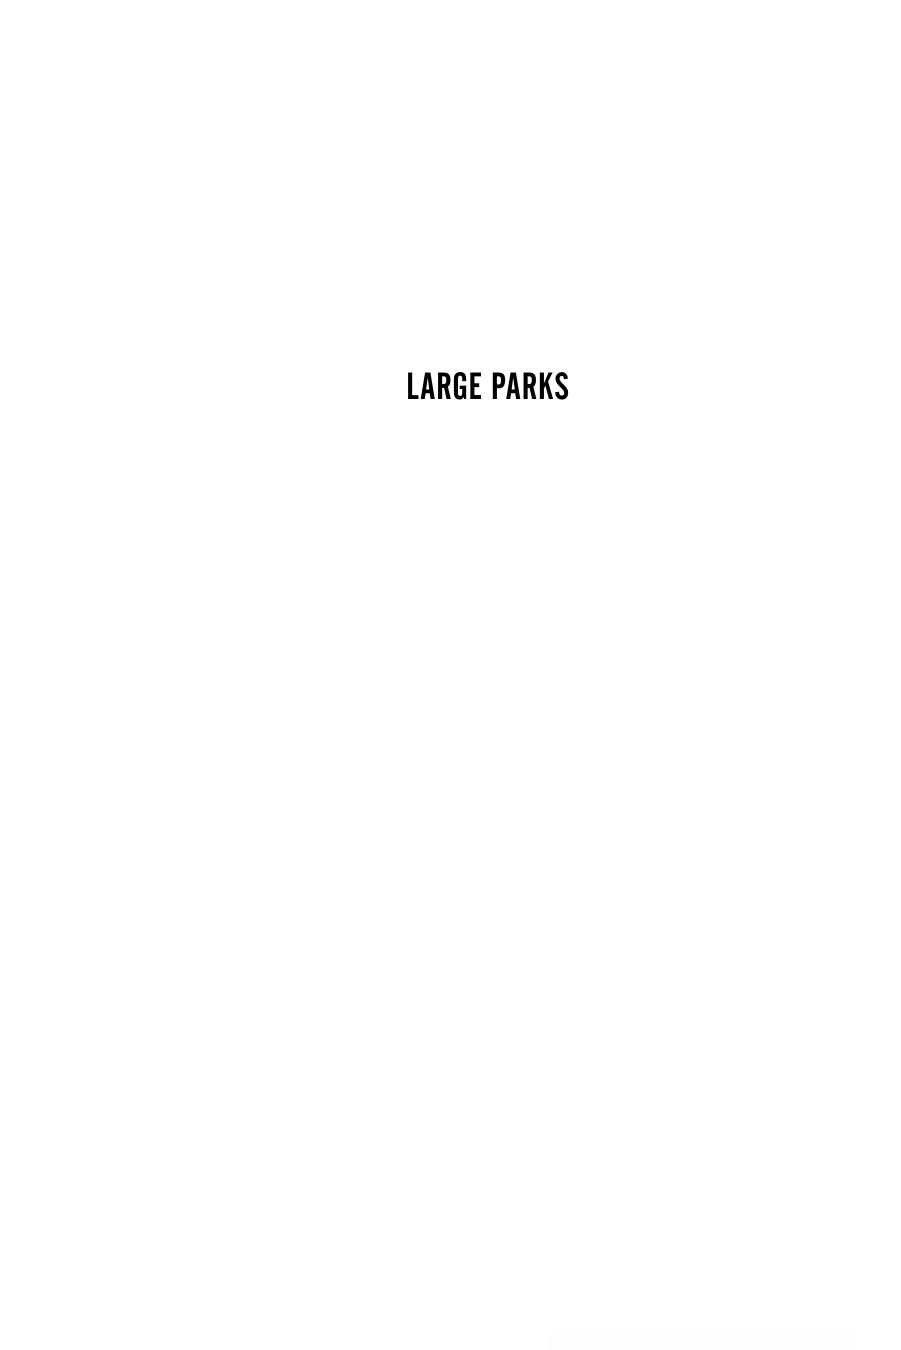 Large Parks by James Corner; Julia Czerniak; George Hargreaves